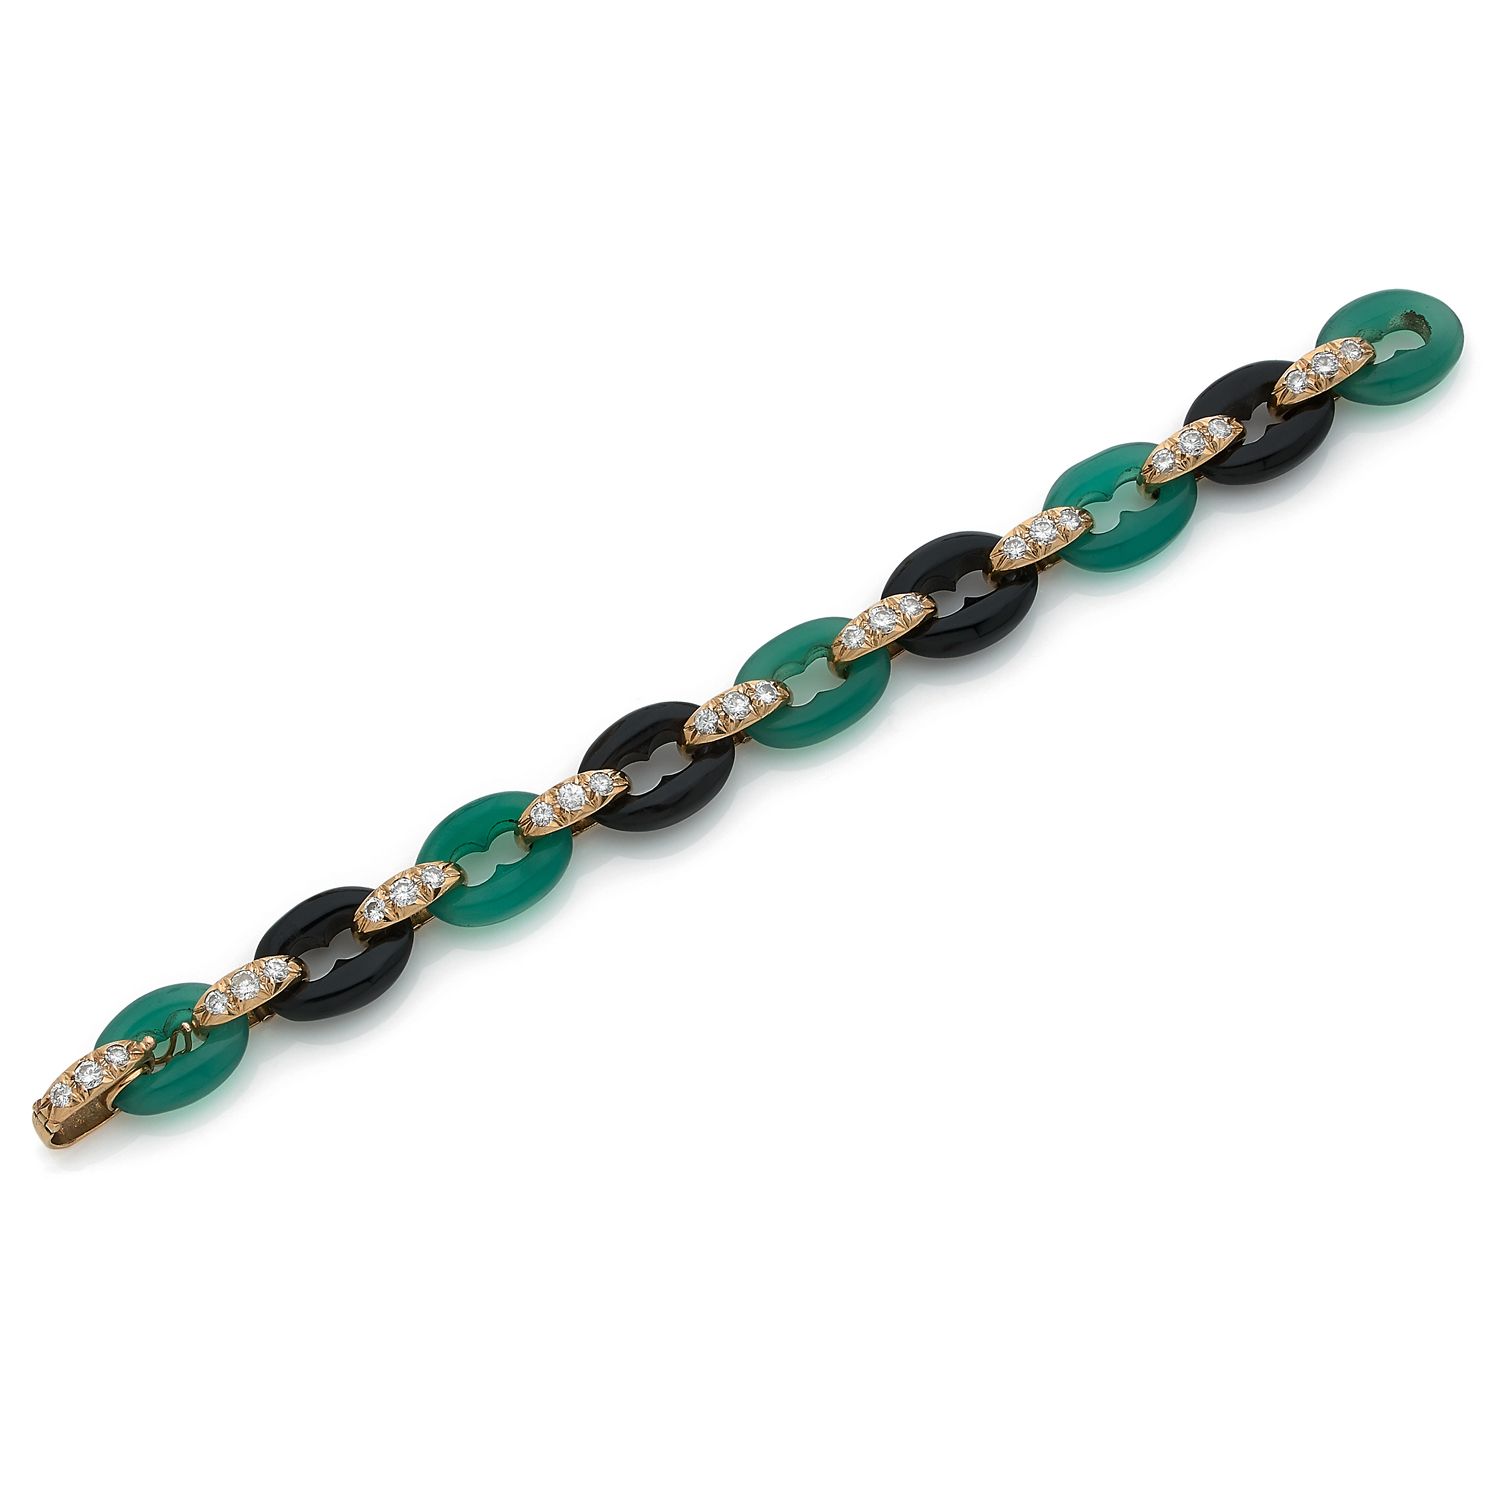 Null 椭圆形缟玛瑙和绿色玛瑙交替组成的铰链式手镯，由18K（750‰）黄金链节连接，并镶嵌钻石

长度：18厘米

毛重：29.3克